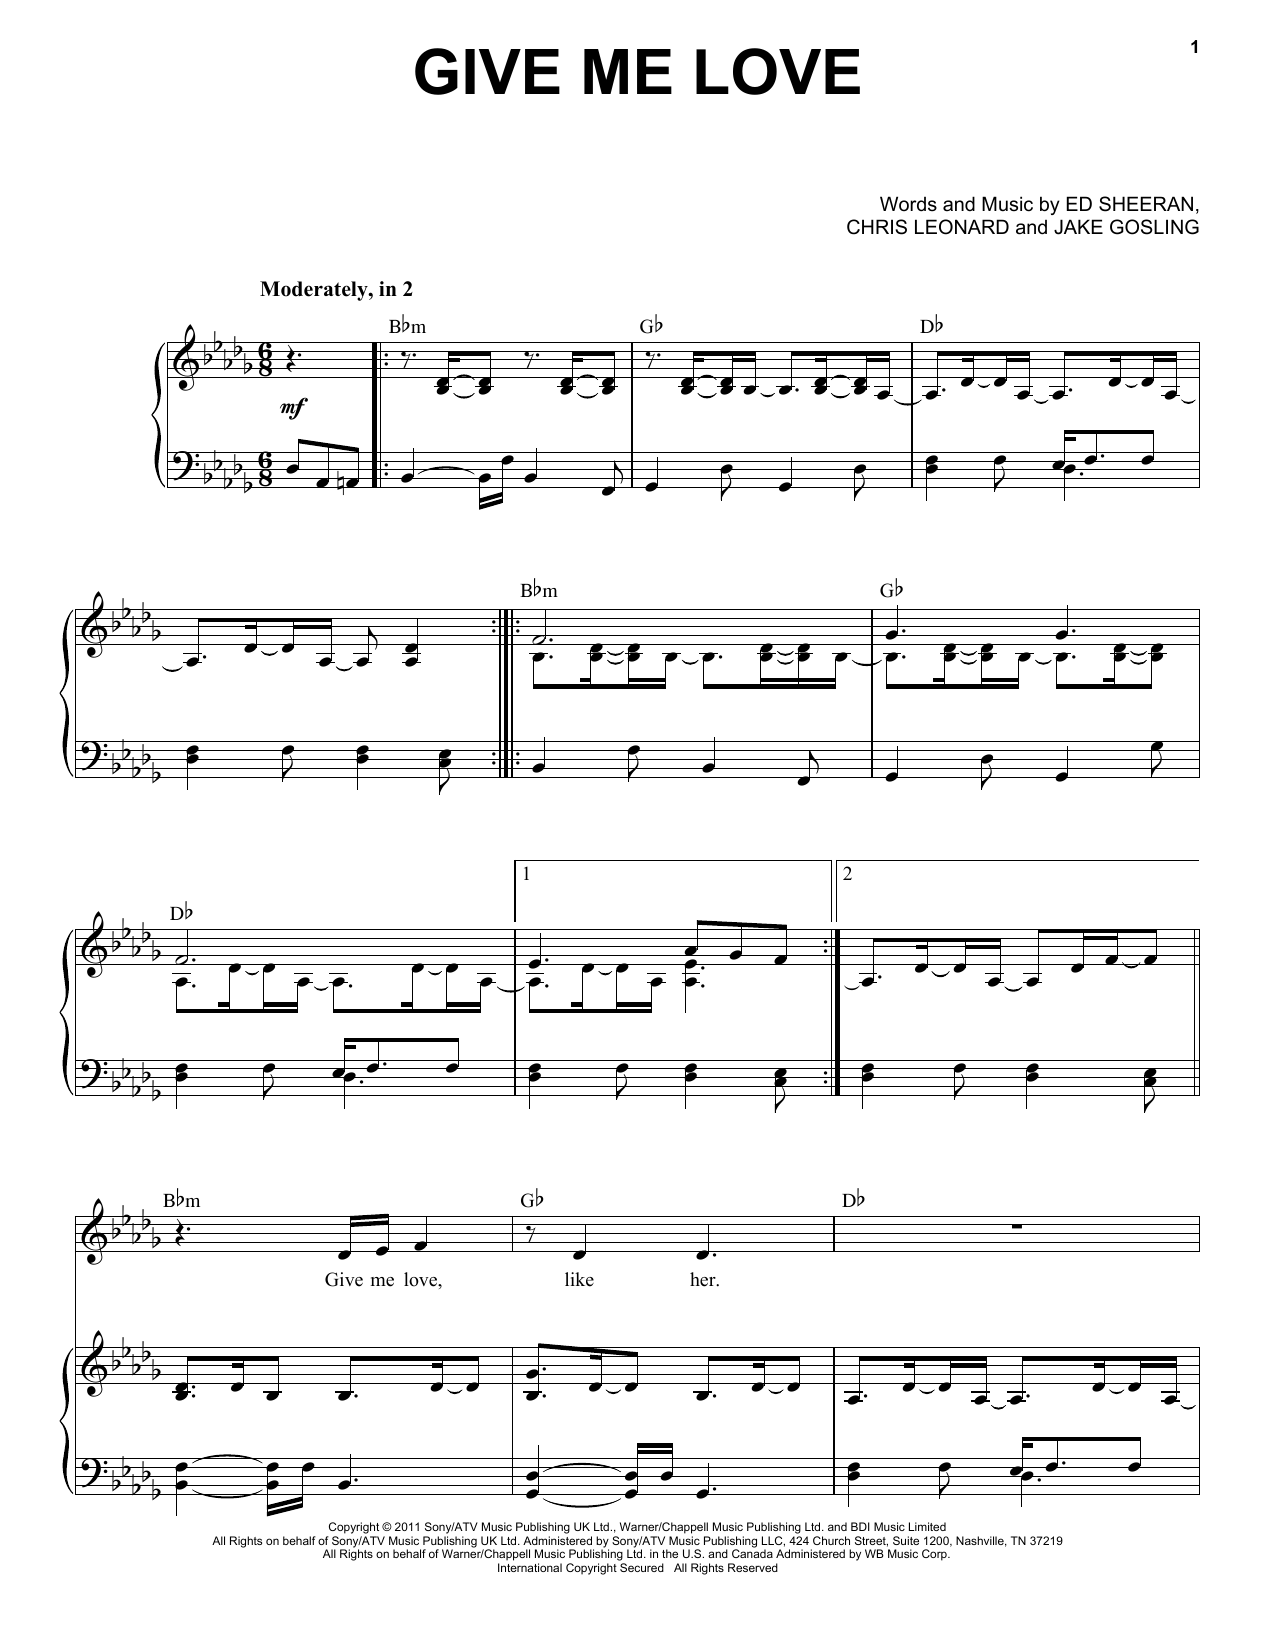 Ed Sheeran "Give Love" Music Notes | Download Printable PDF Score